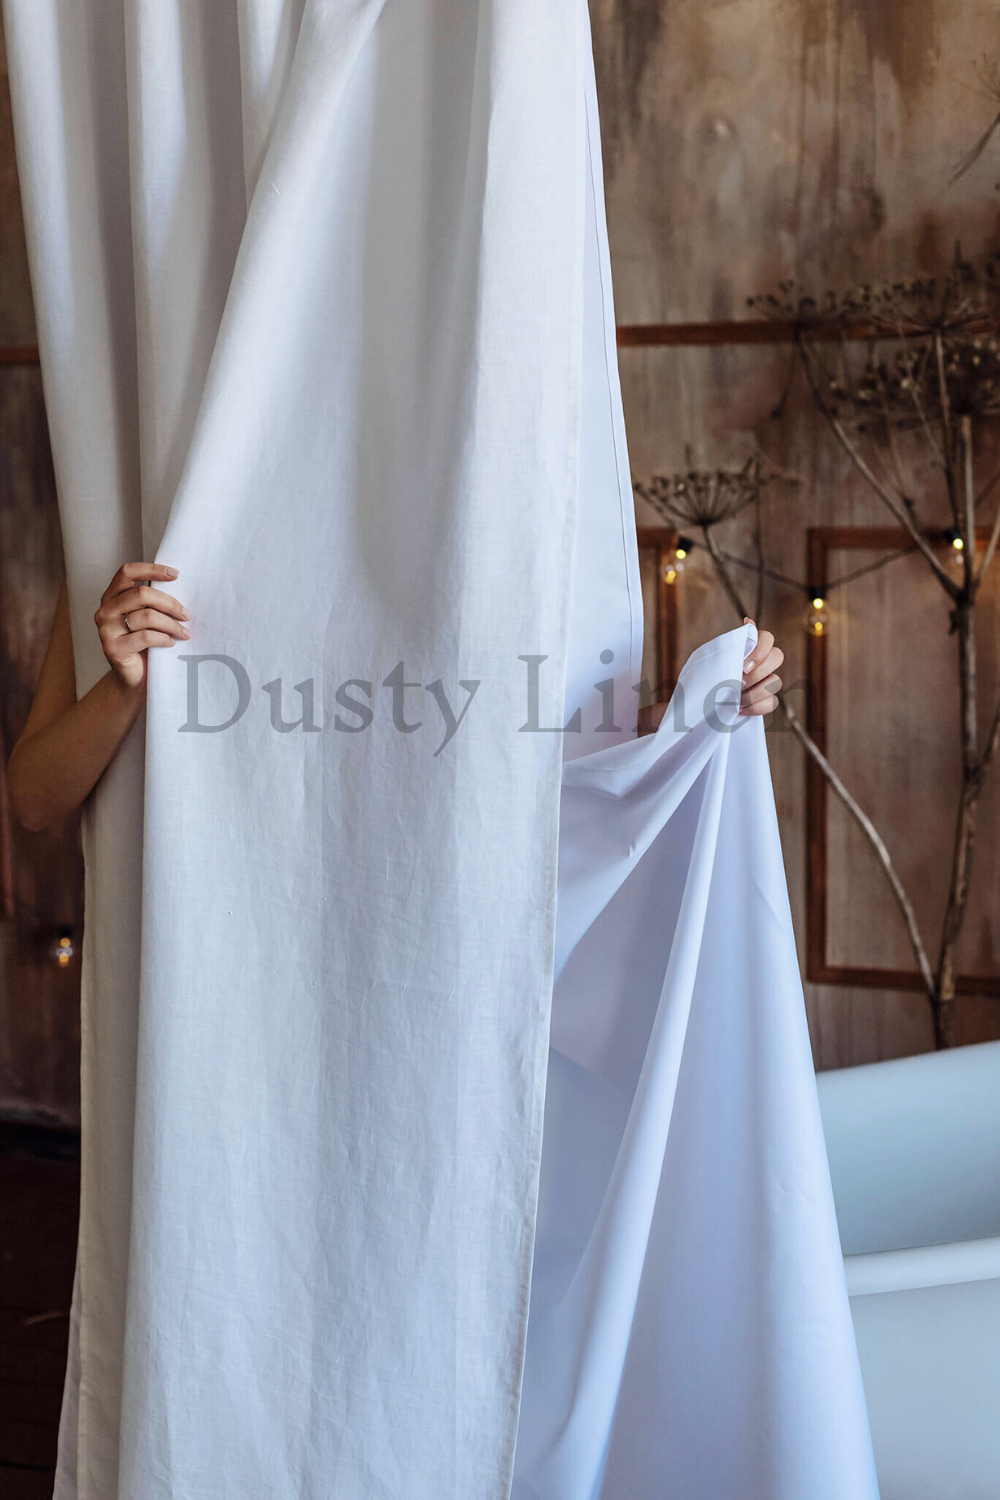 farmhouse gift linen curtain in white color.